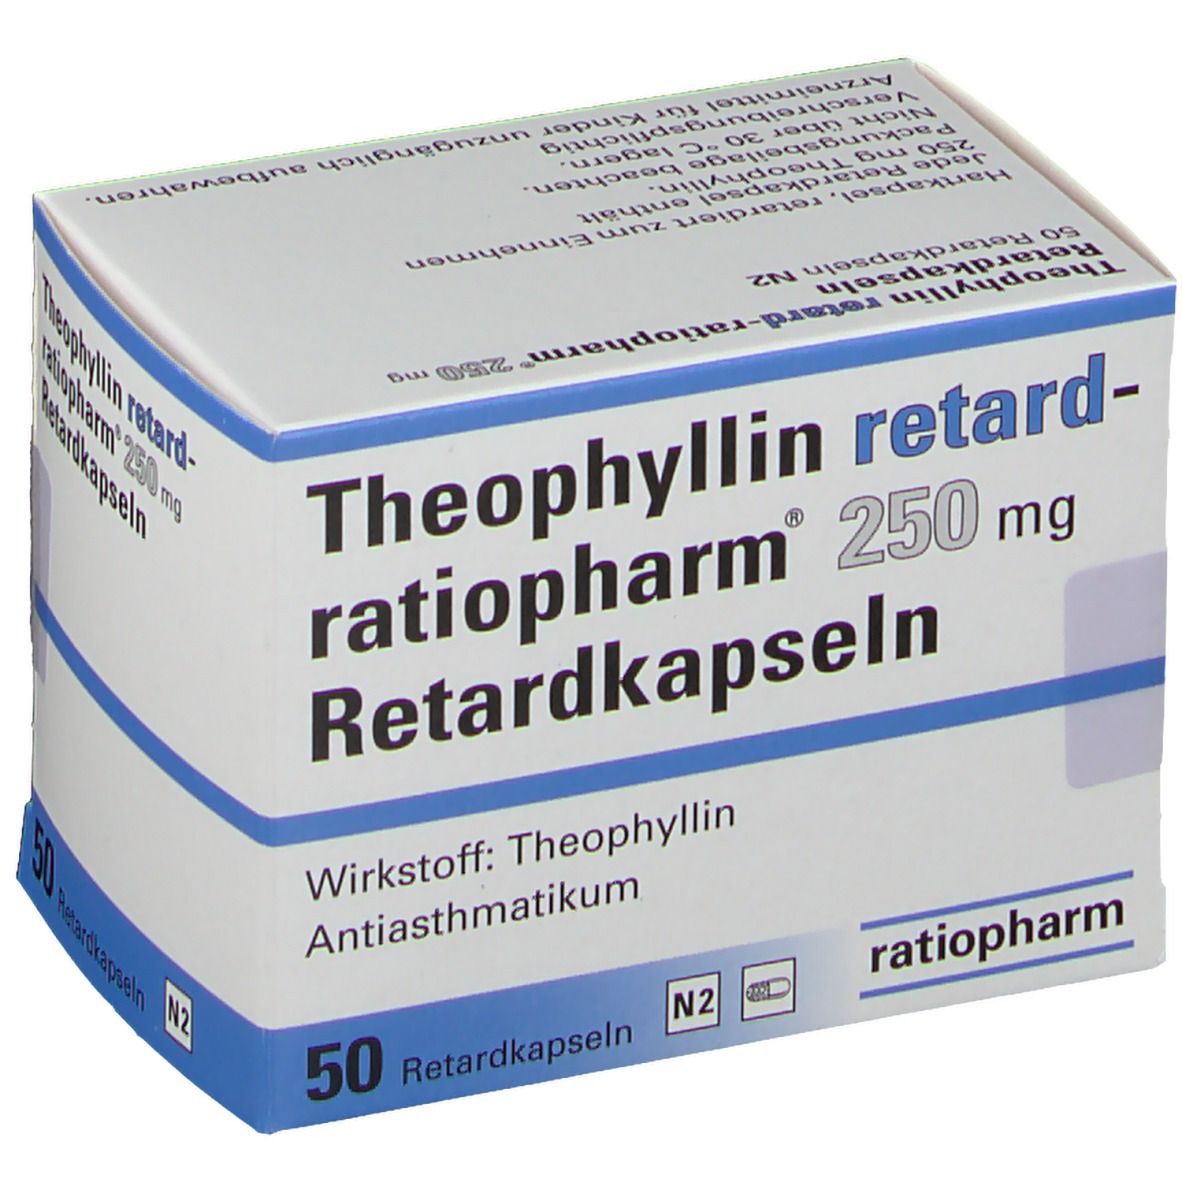 Theophyllin retard-ratiopharm® 250 mg